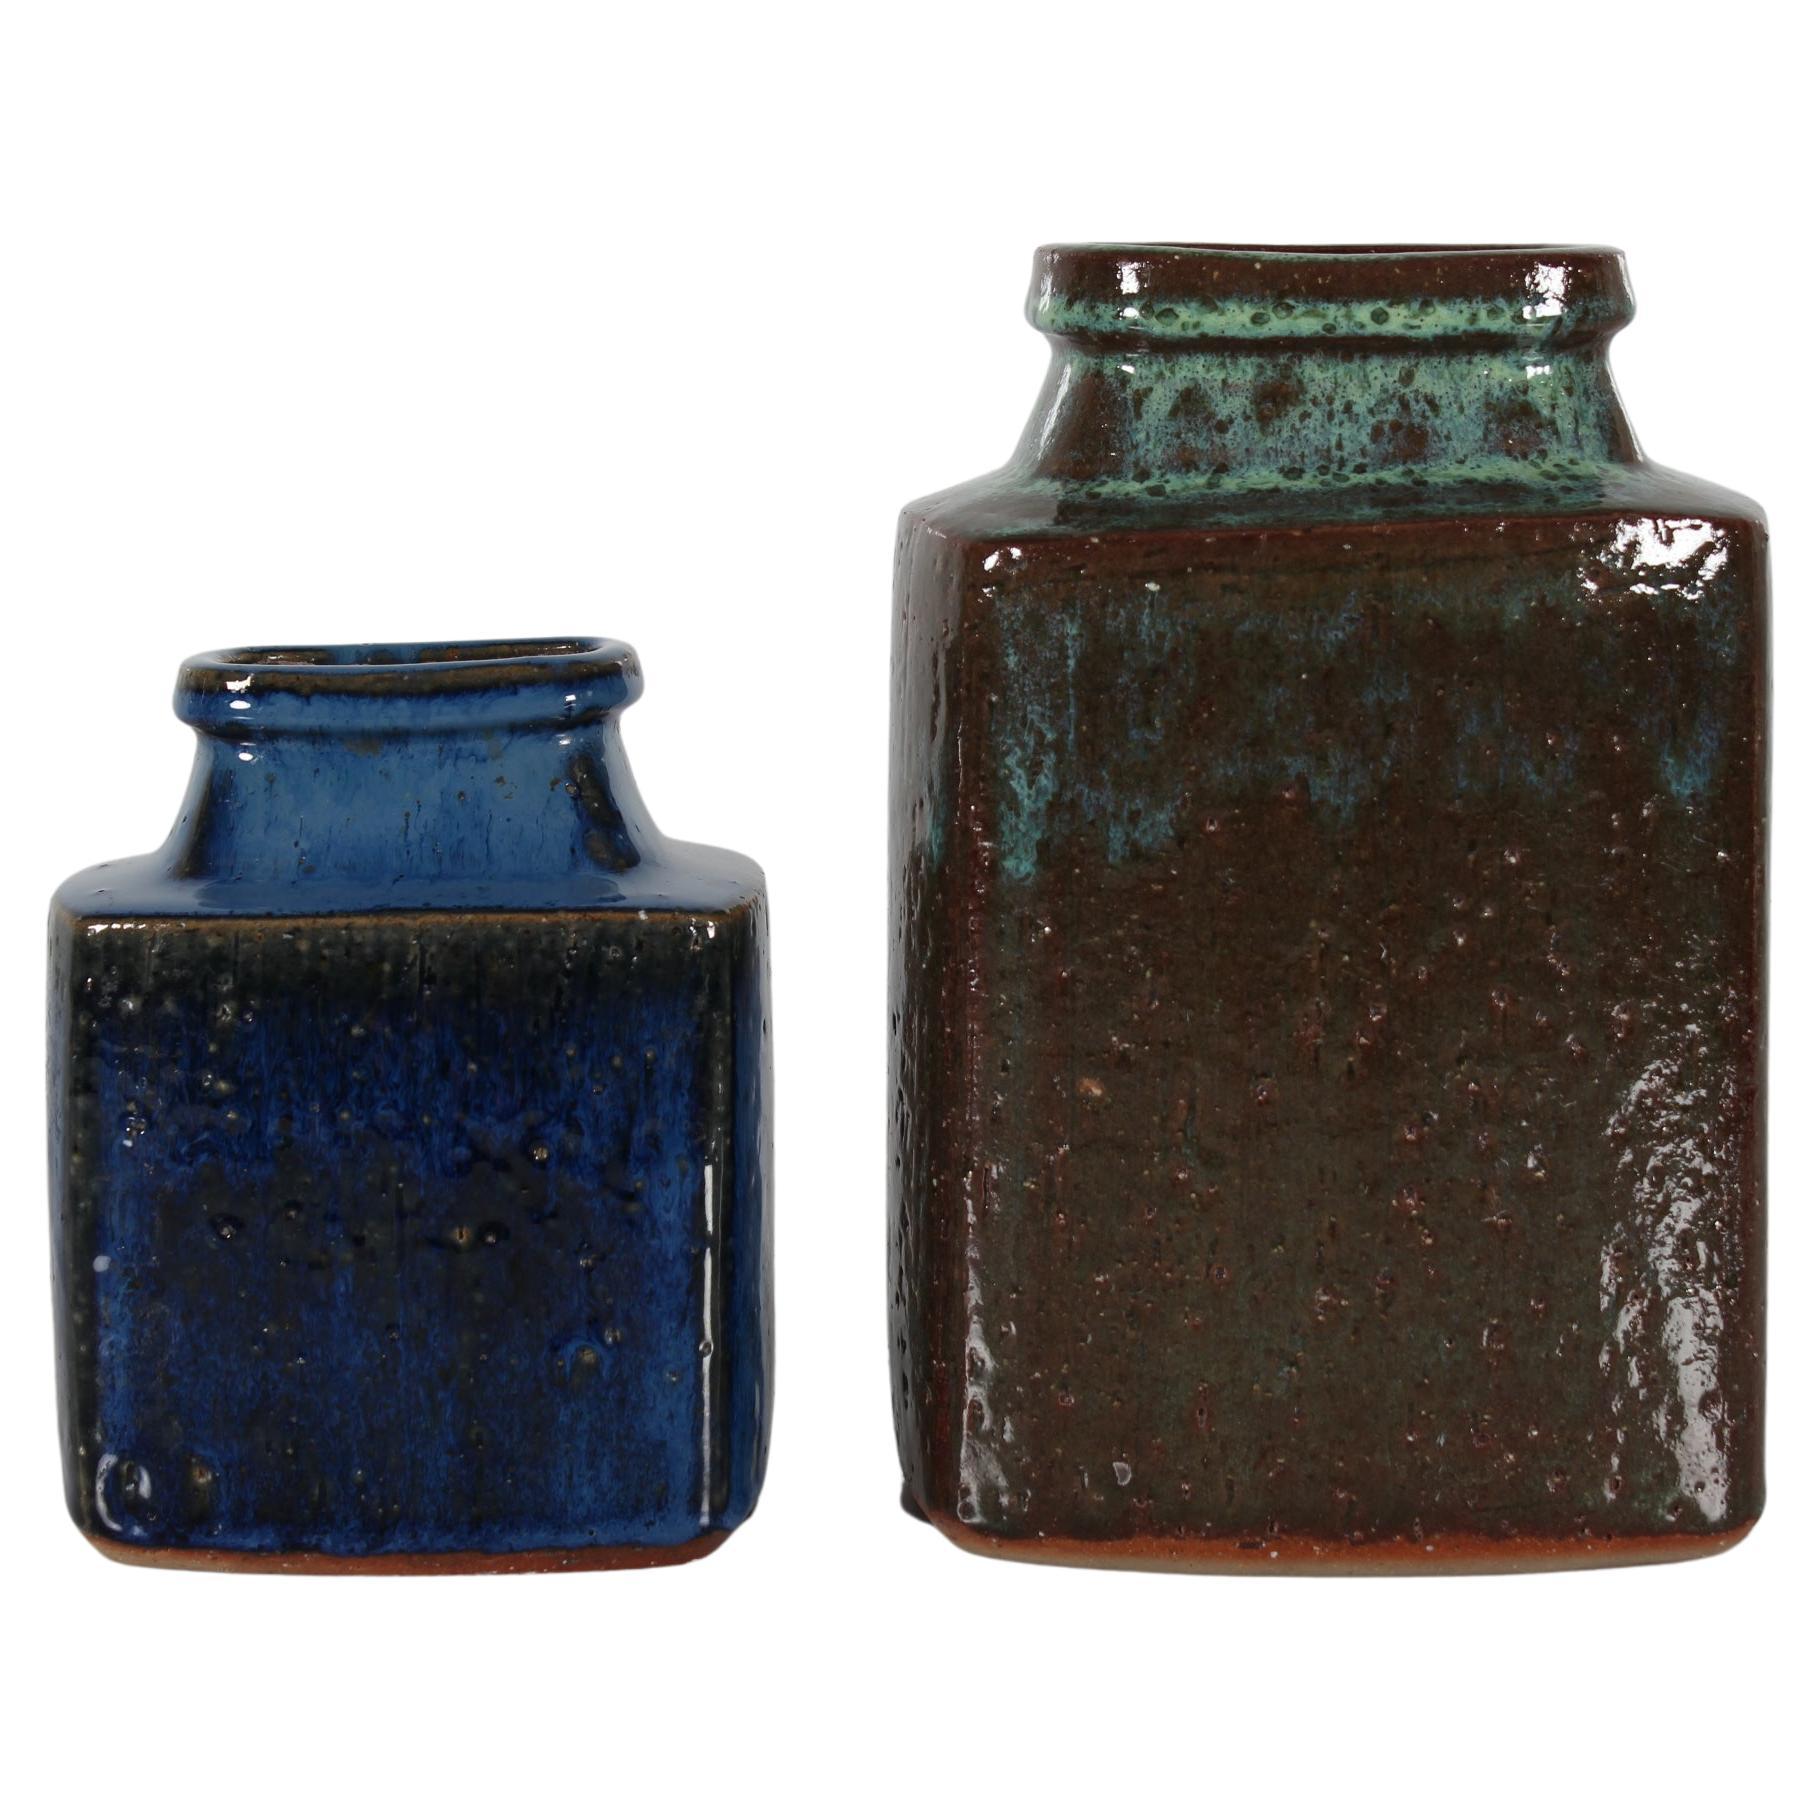 Danish Brutalist Pair of Square Rustic Ceramic Vases by Jytte Trebbien 1970